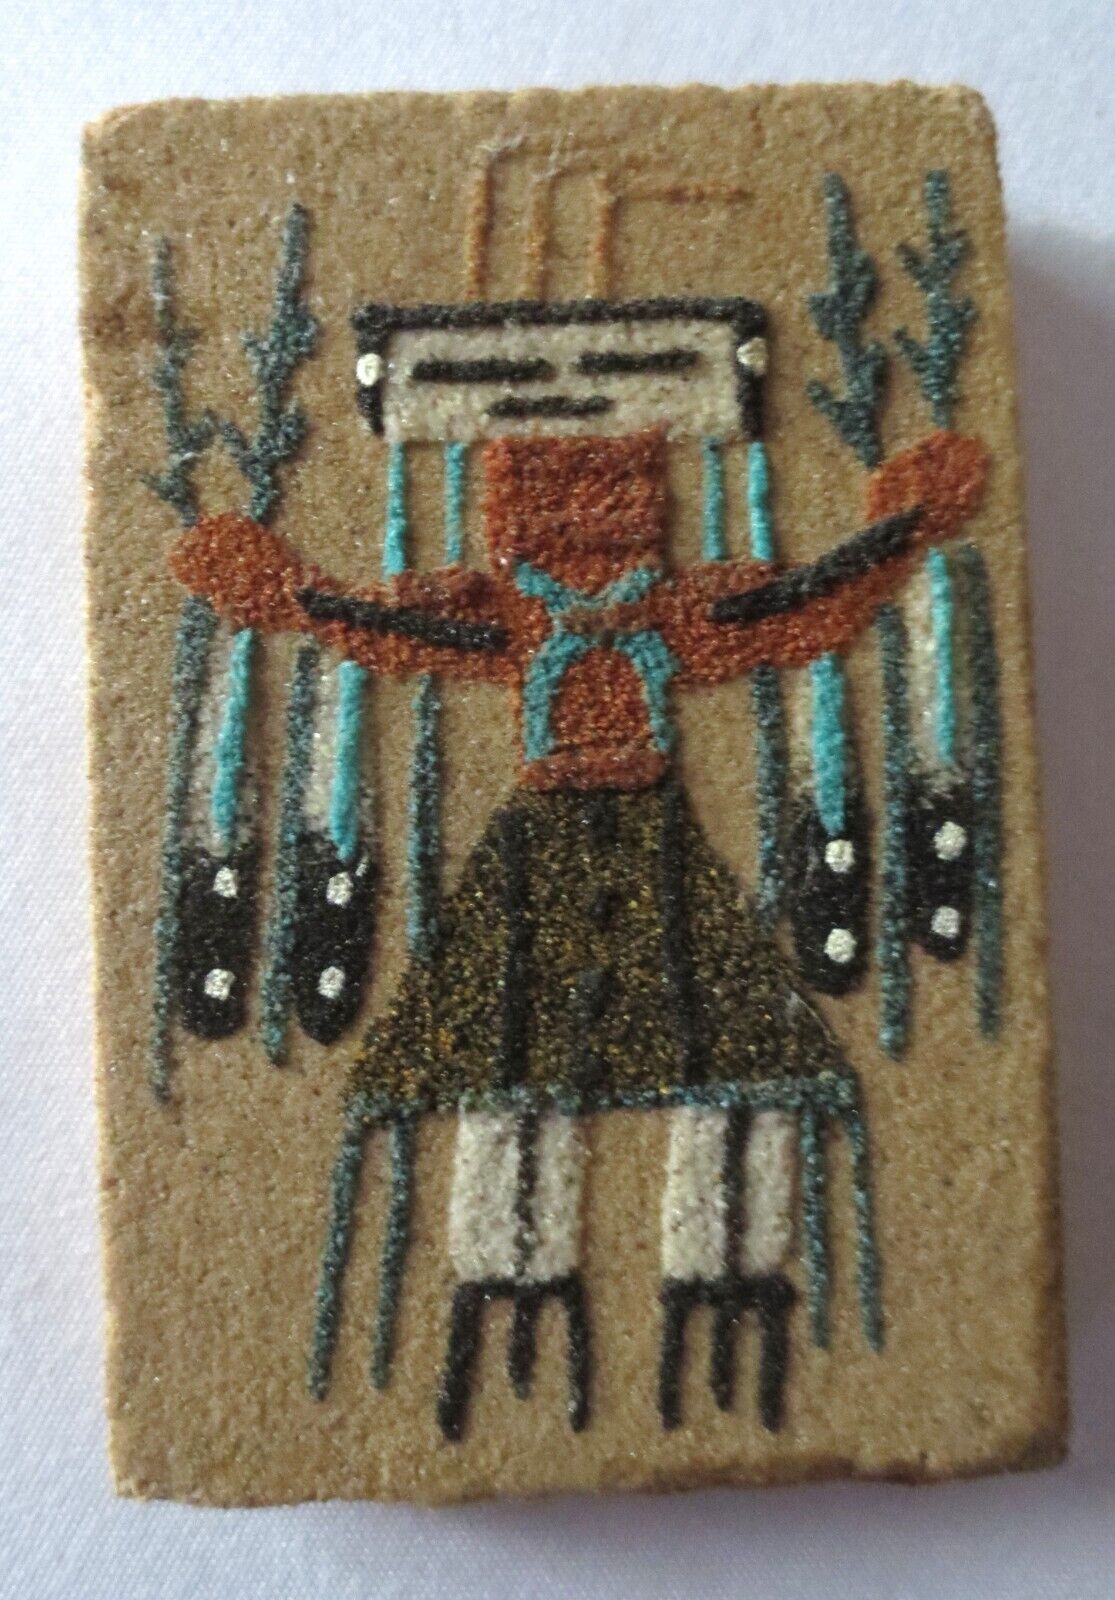 KACHINA MAGNET VINTAGE Sandcast Navajo Artisan Crafted Signed Hand Painted Art